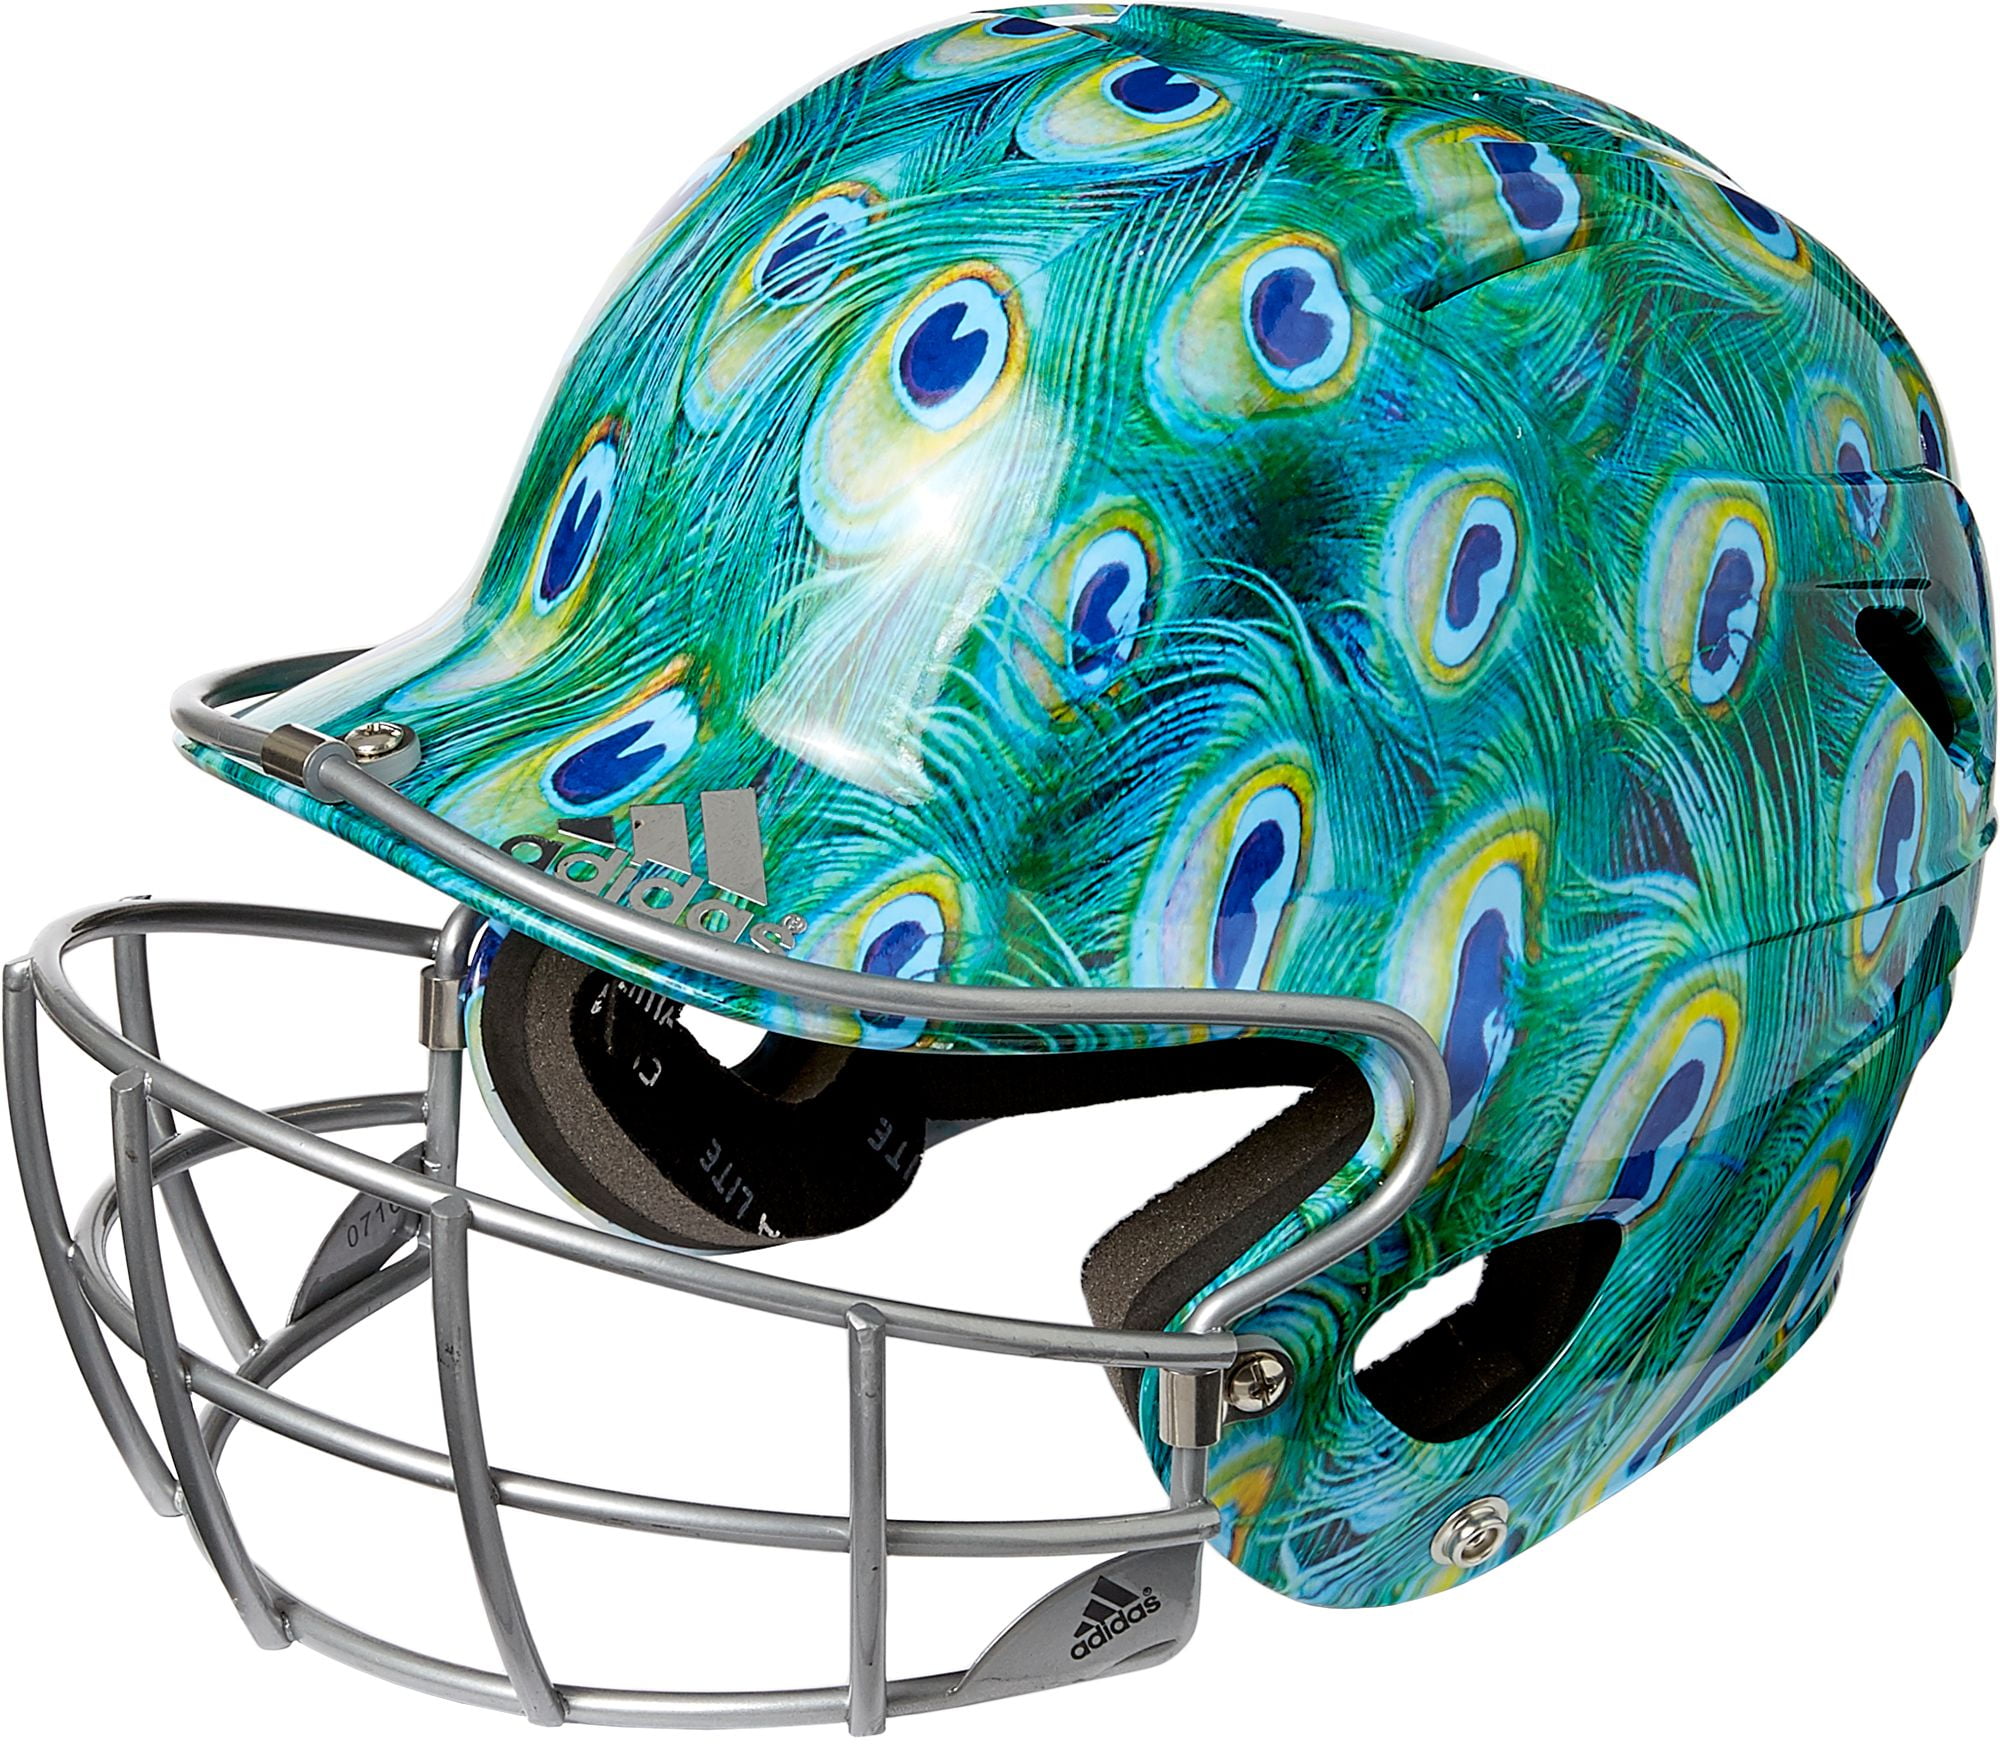 adidas batting helmet facemask